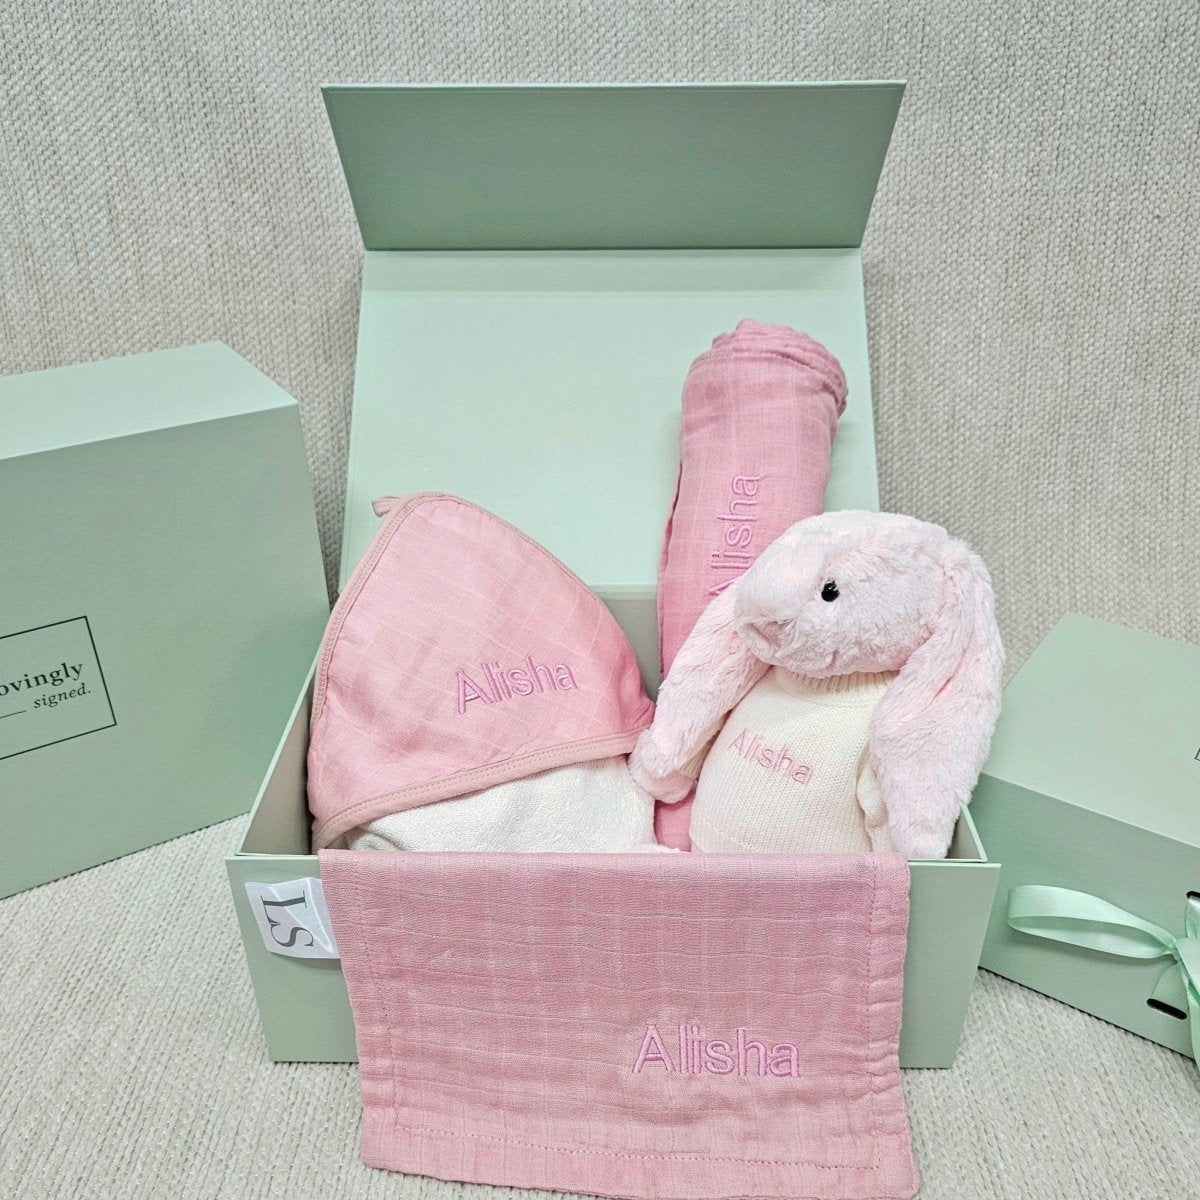 Bamboo Bliss Pink Gift Set - LOVINGLY SIGNED (HK)